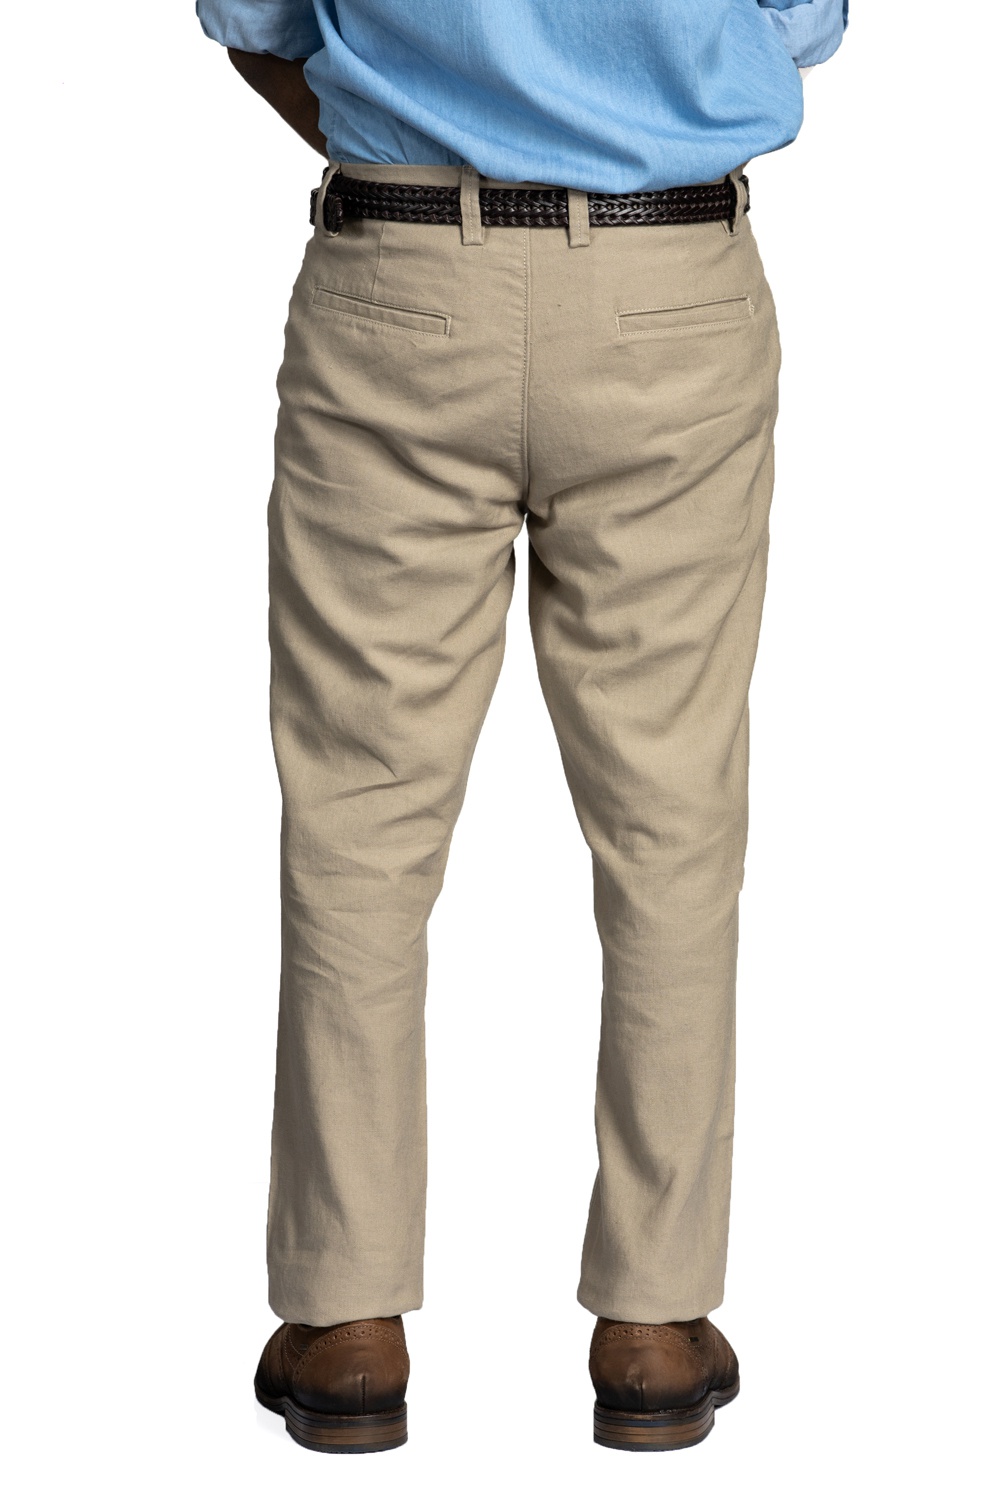 COCOS men's linen pants